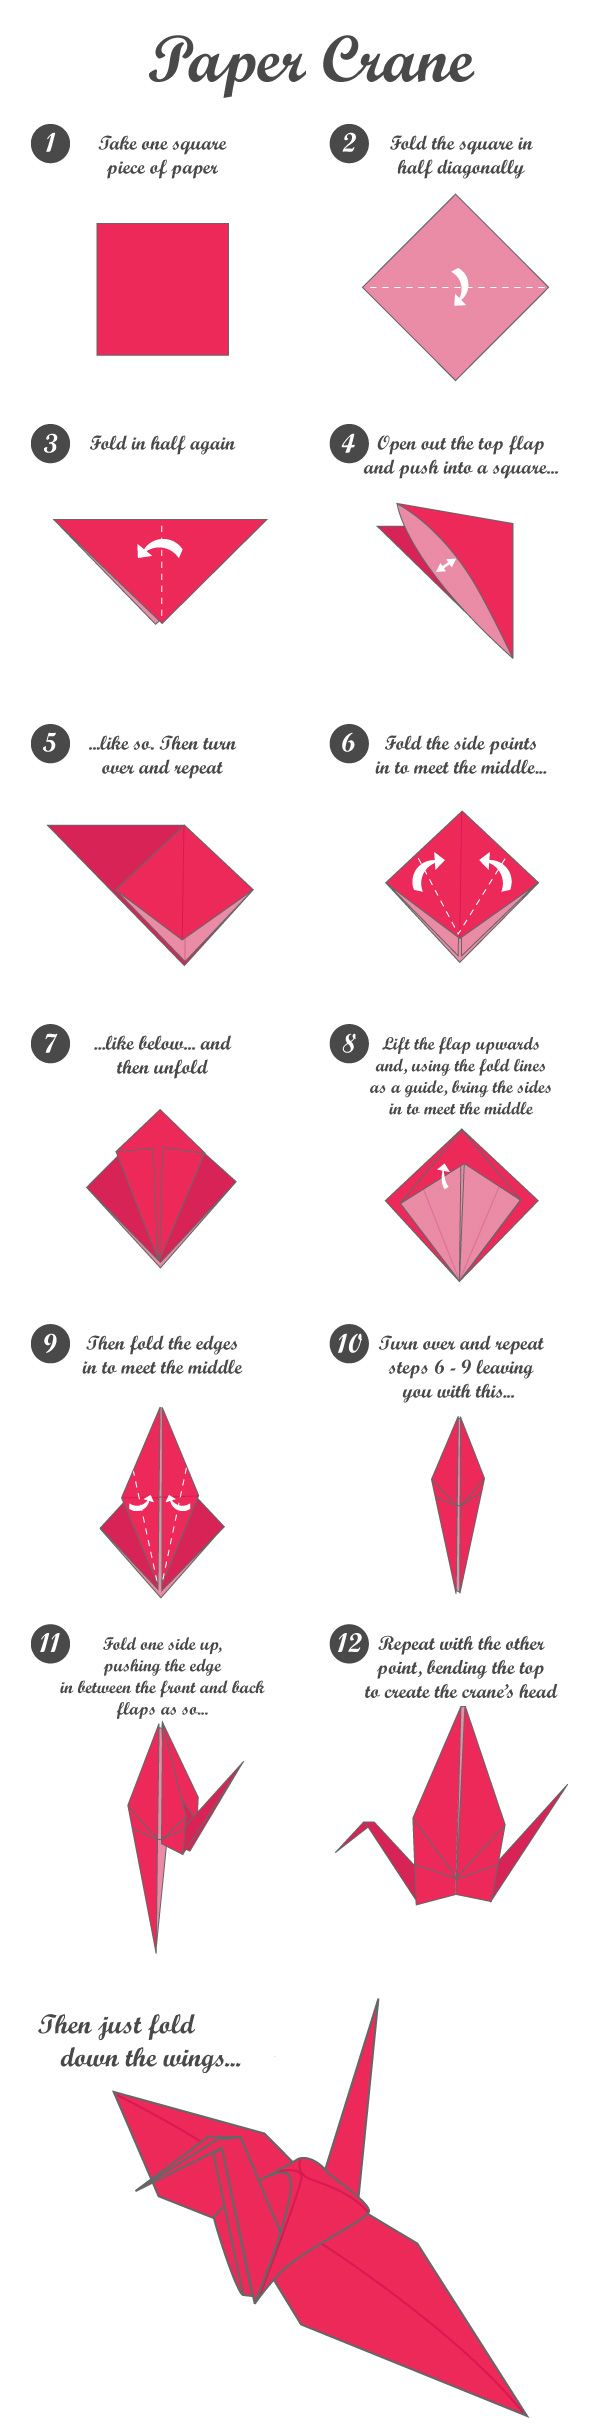 30+ Creative Picture of Origami From Gum Wrapper craftora.info